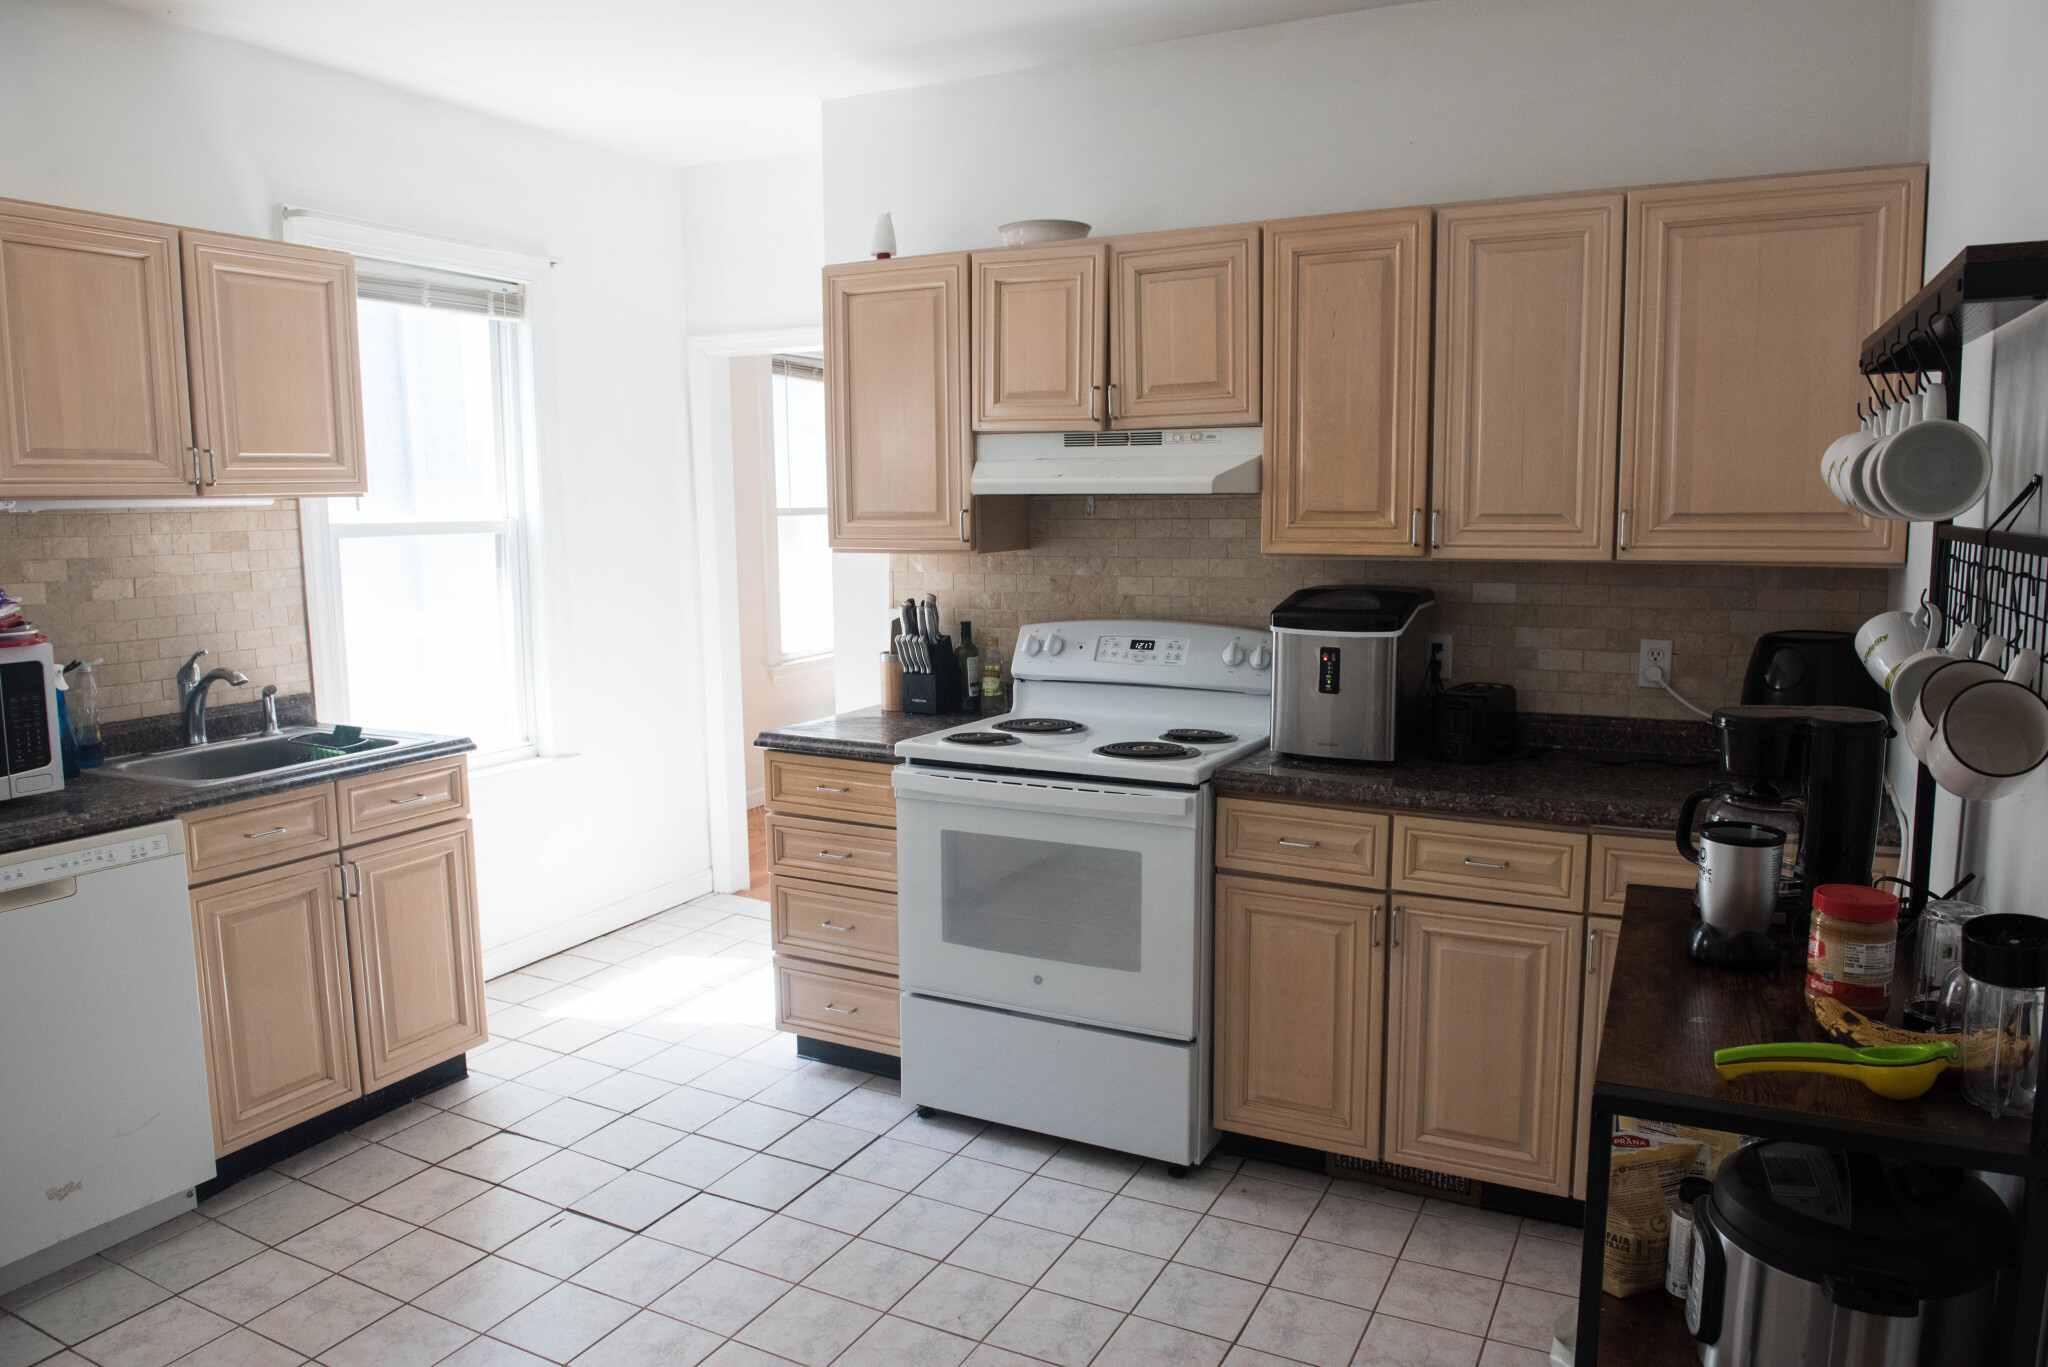 Photos of apartment on Brooks St.,Boston MA 02135